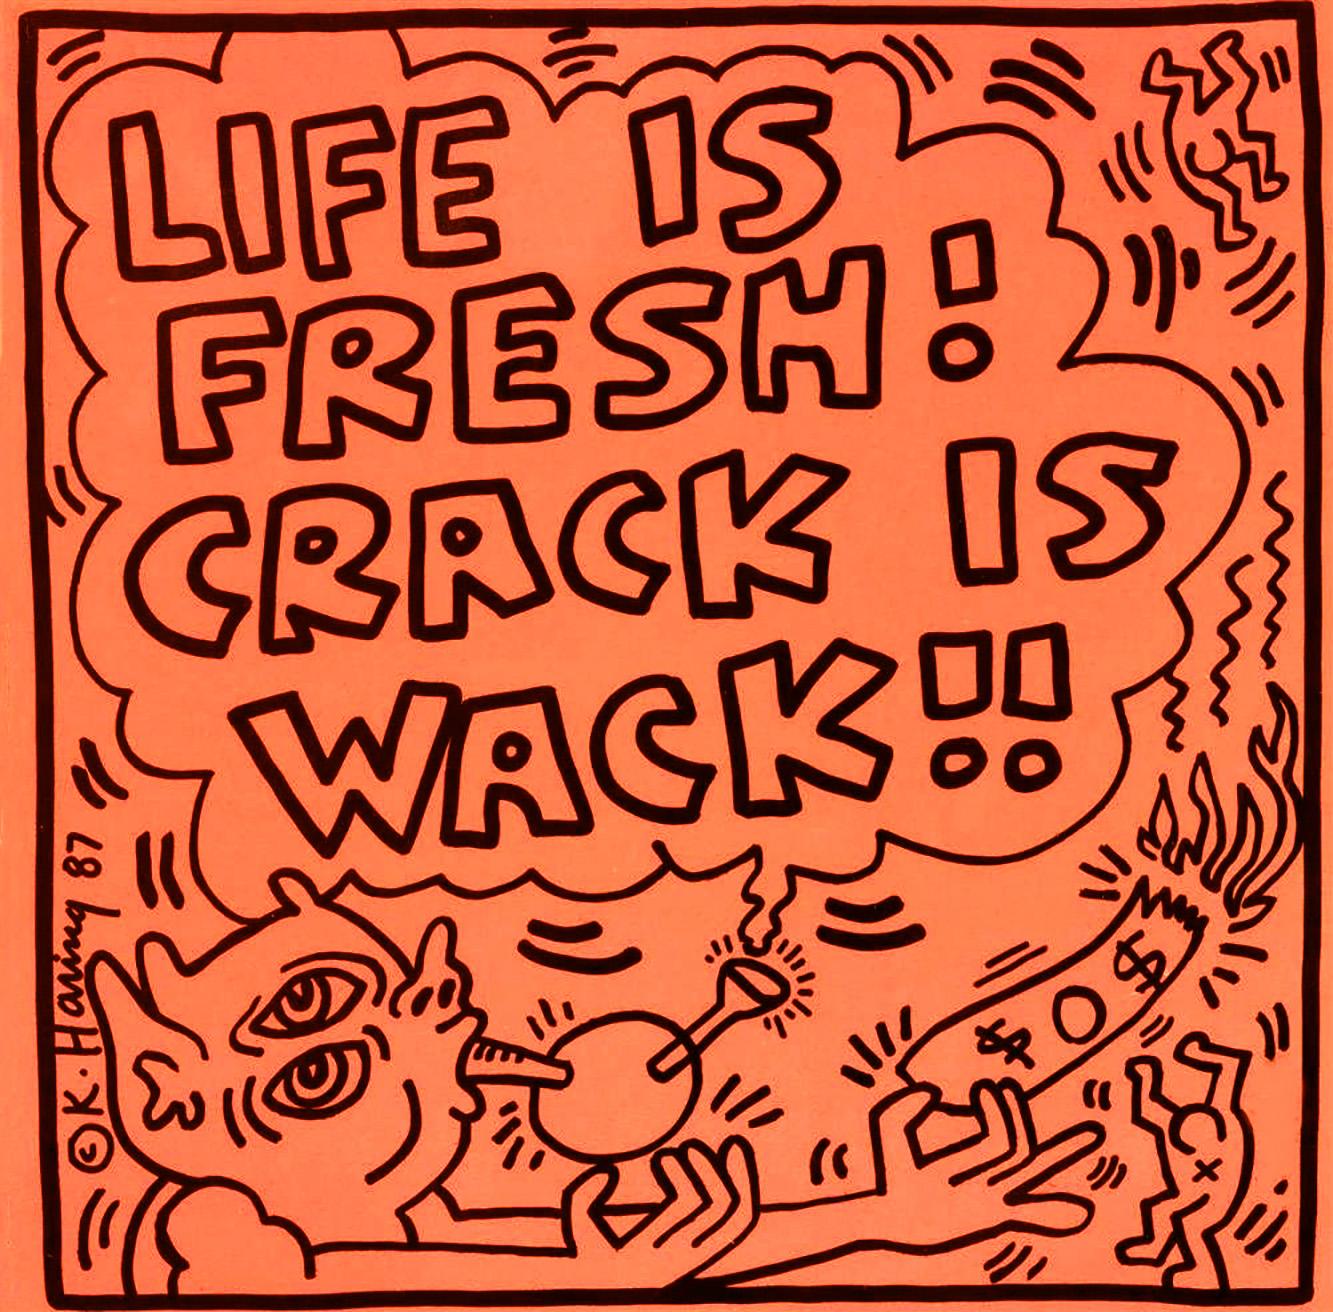 life is fresh crack is wack